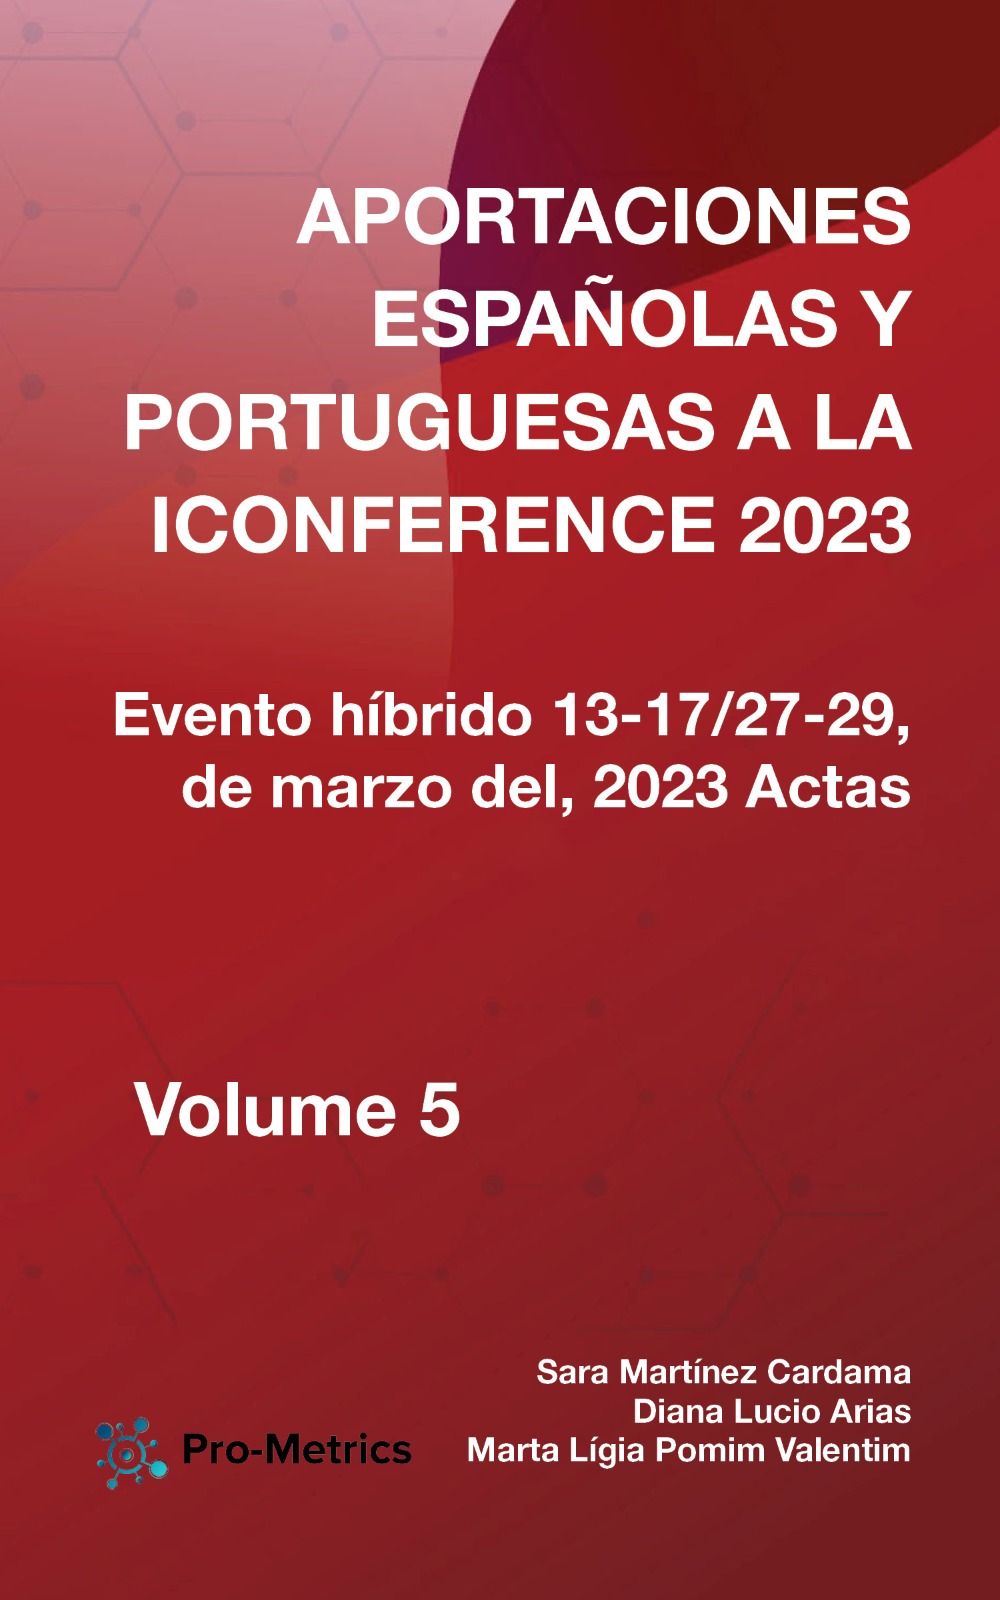 					View Vol. 5 (2023): Congreso iConference 2023
				